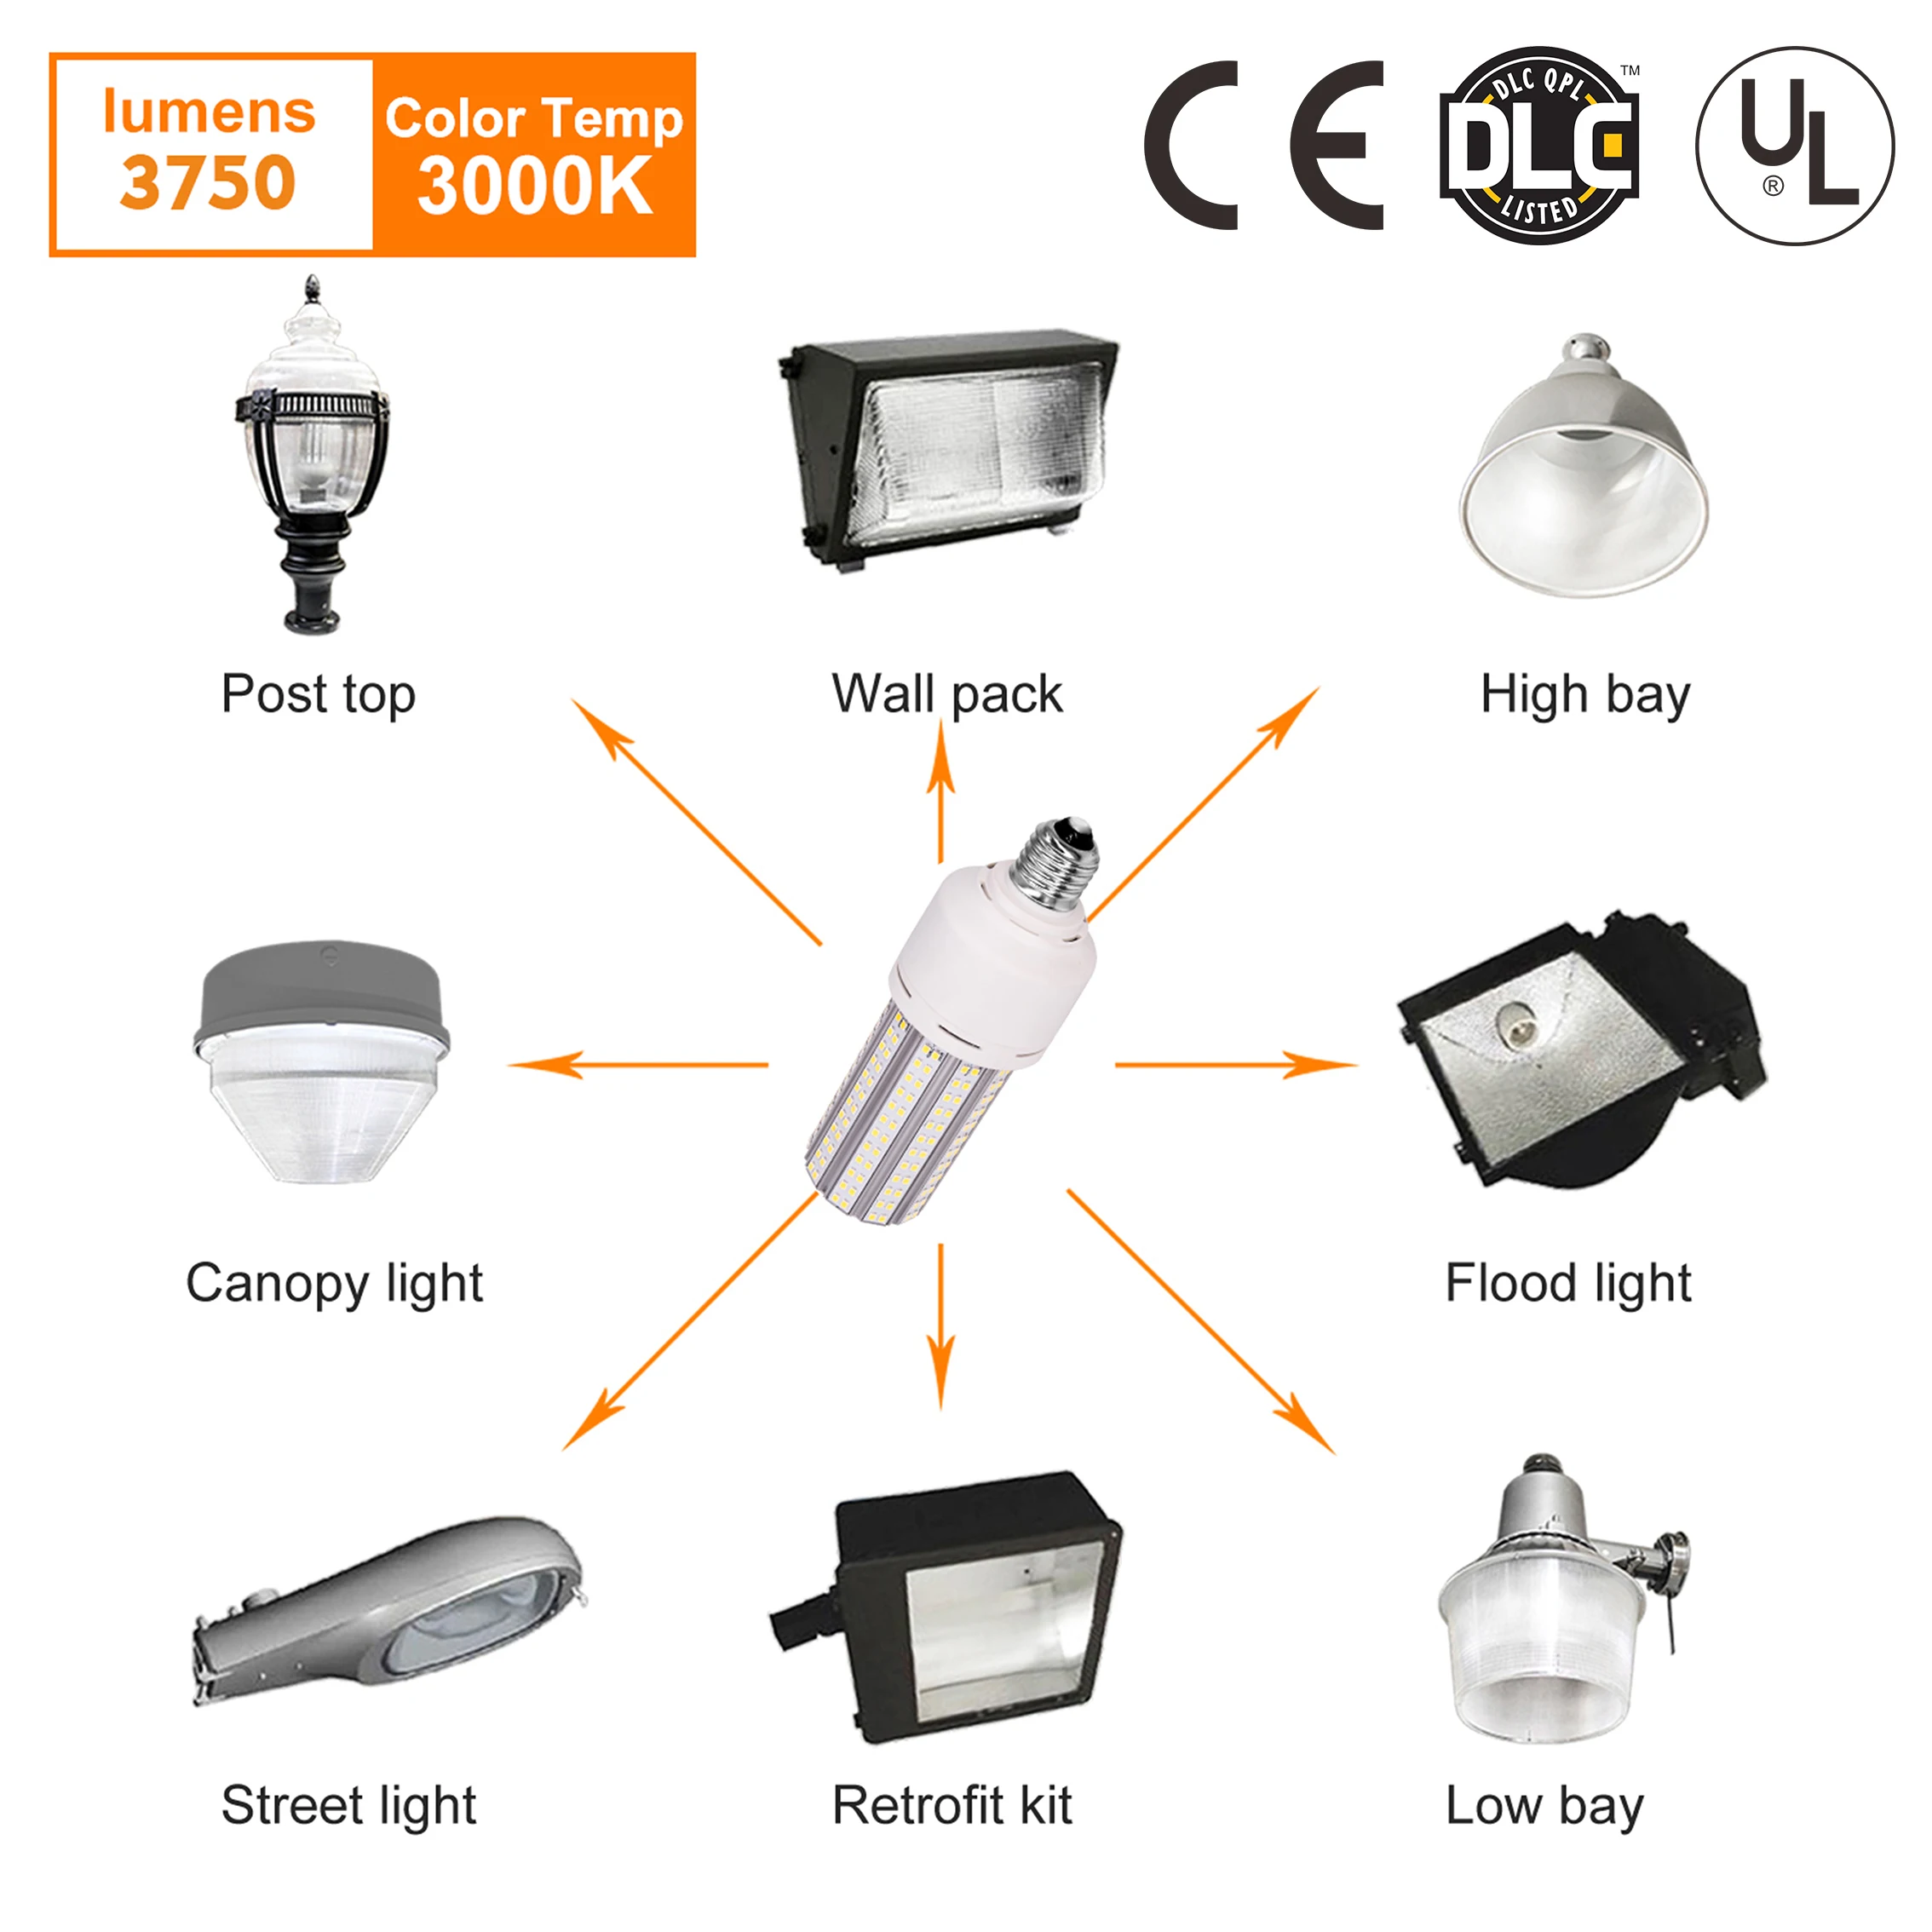 High Luminous Efficacy LED Corn Light Office Lighting 100V-277V 5W 7W 10W 15W 20W 30W 3000K-3500K with E14 B22 G24 Certificate